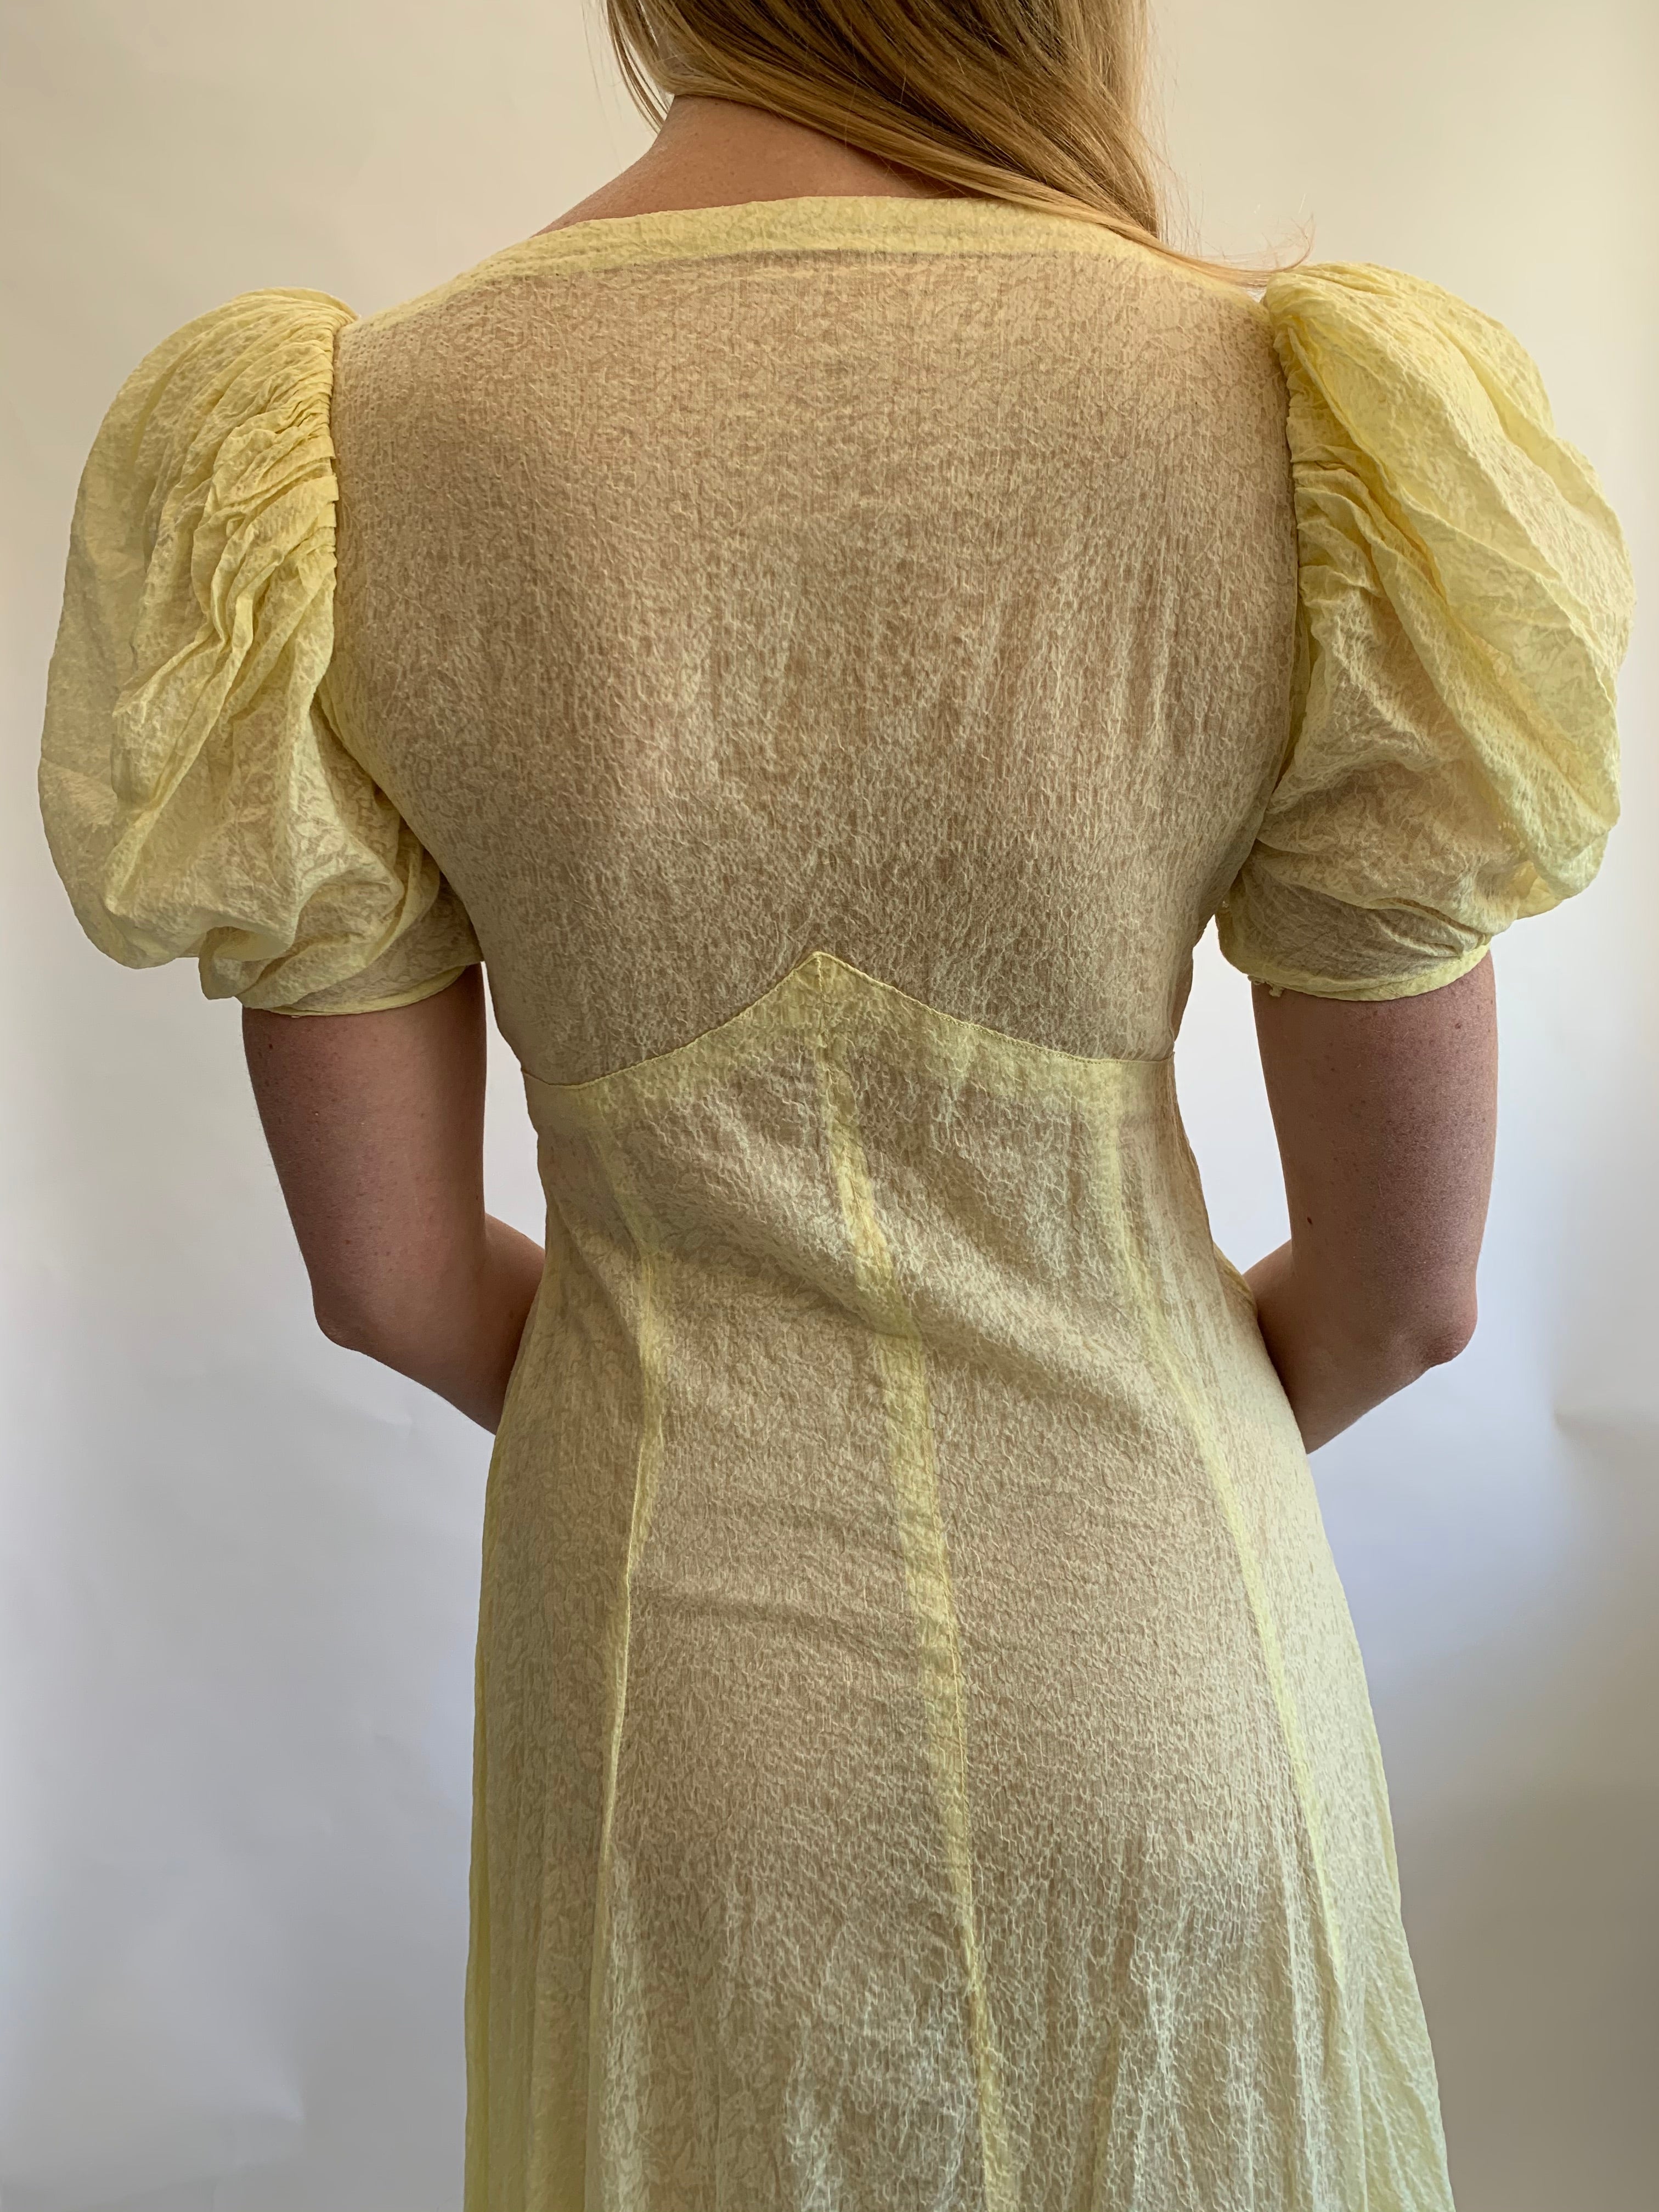 1930's Yellow Lightweight Silk Cloque Dress with Puffed Sleeves